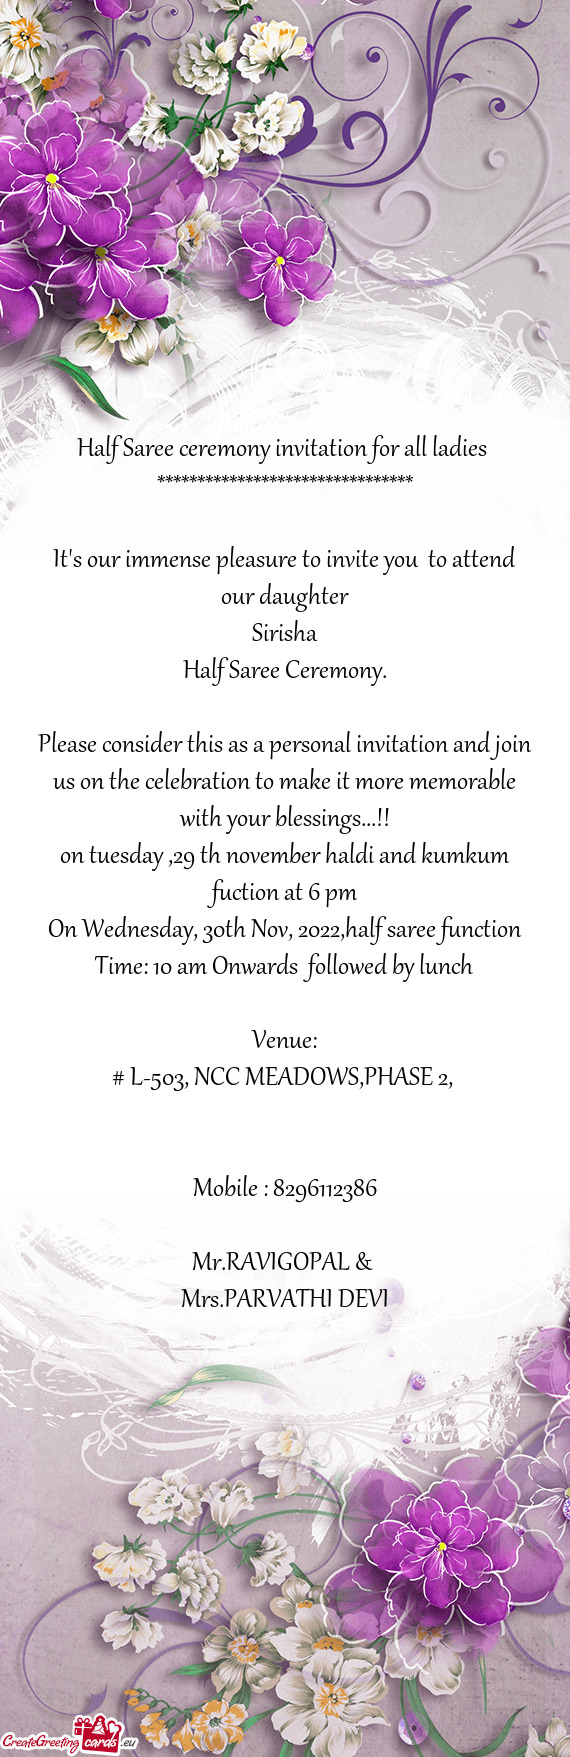 On Wednesday, 30th Nov, 2022,half saree function